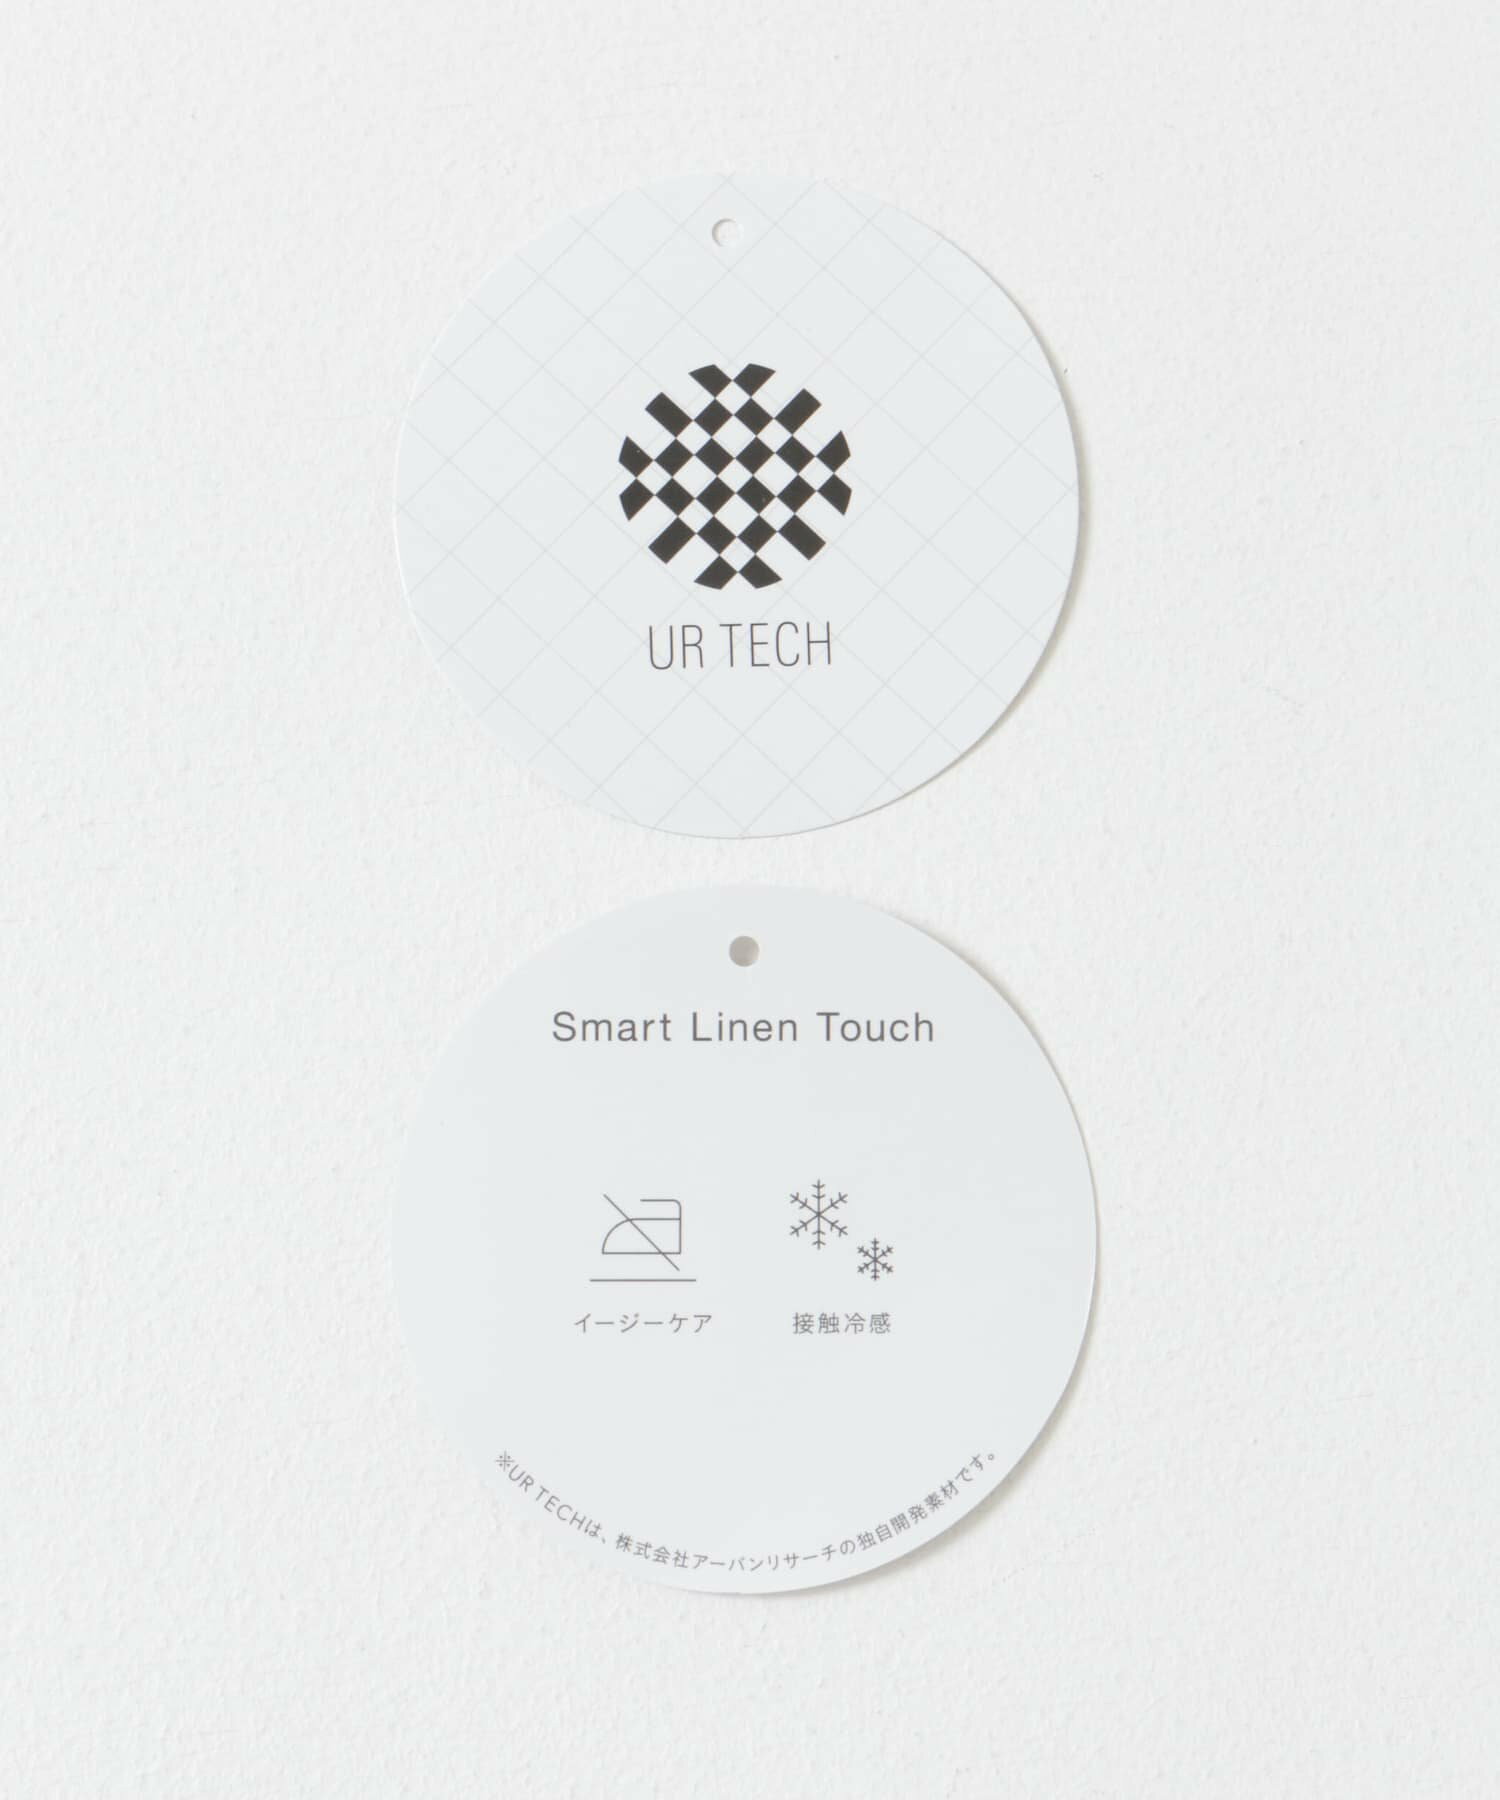 『UR TECH Smart Linen Touch』レイヤードブラウス